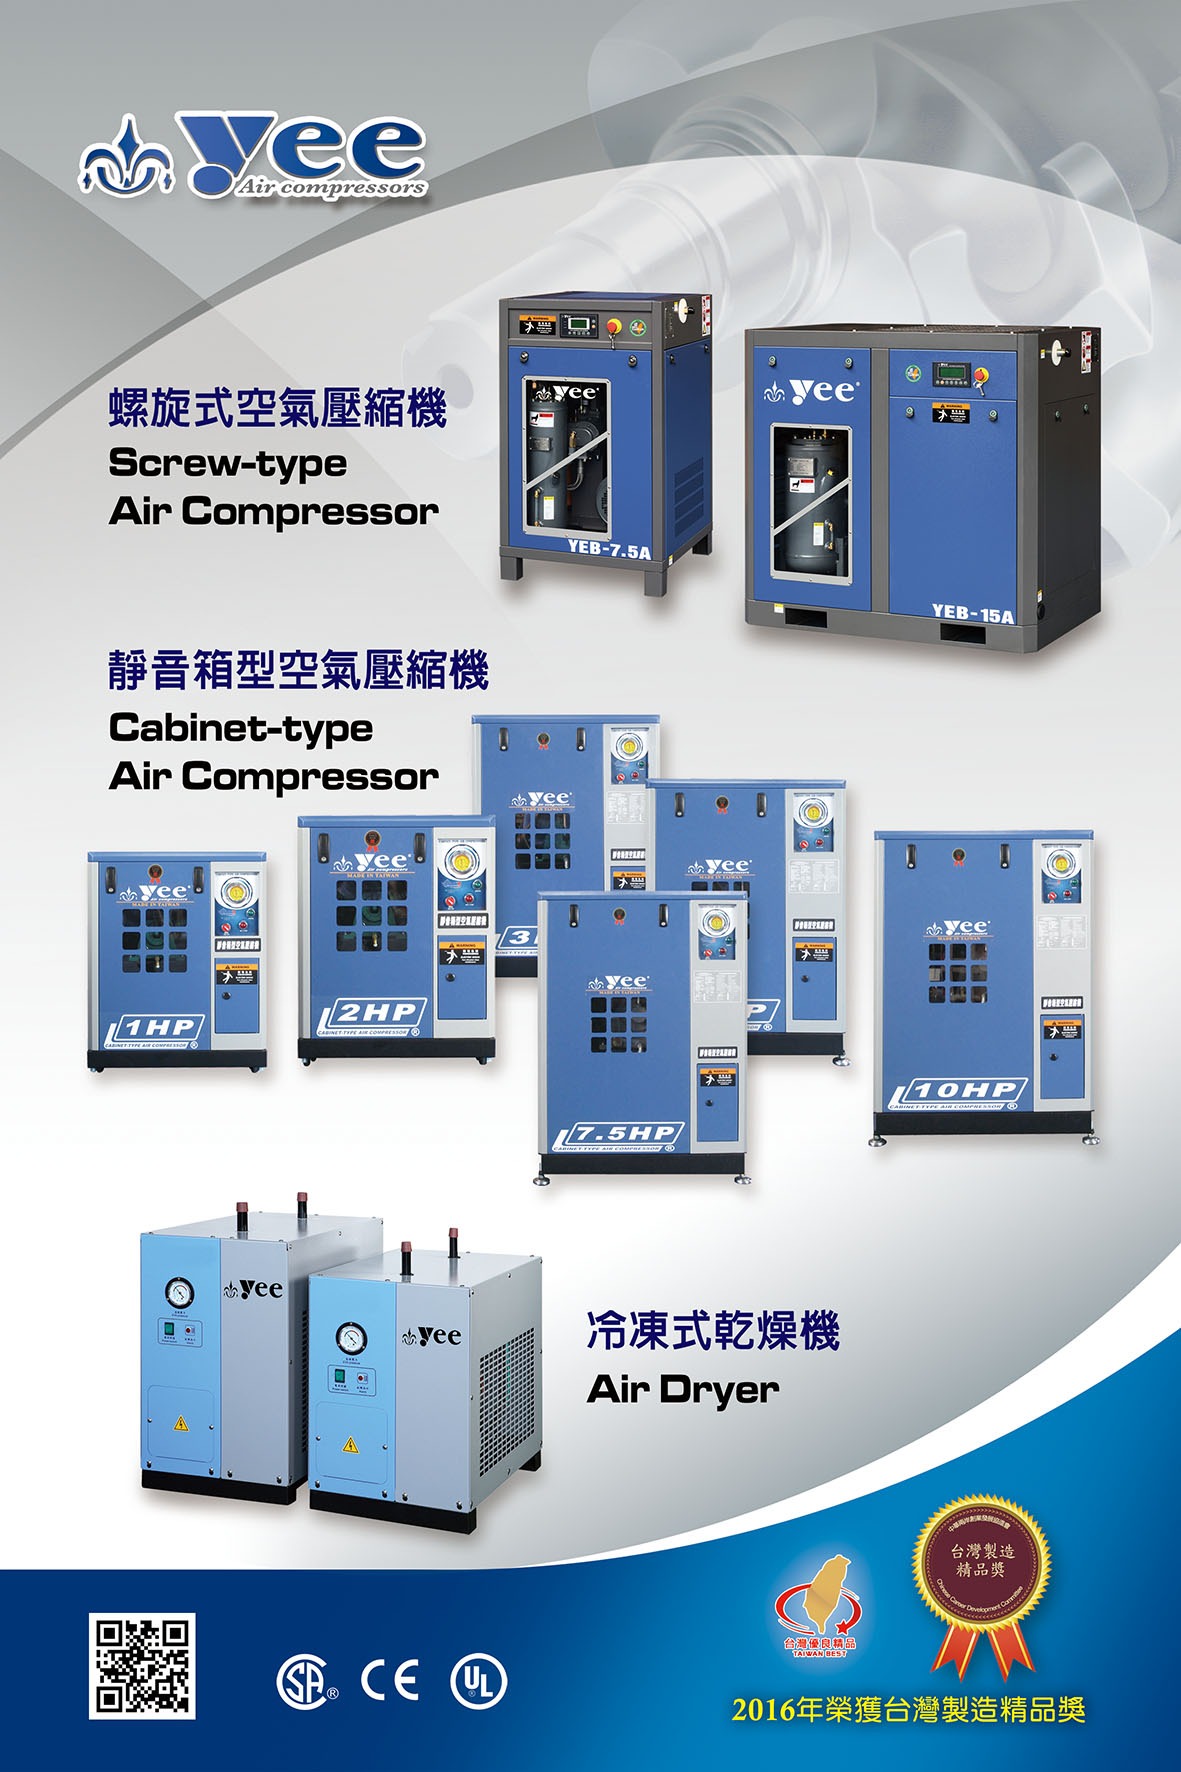 Industrial Machine / Equipment Air Compressor for Repair / Maintenance Equipment made by MIN LI ZEN CO., LTD.　敏力升企業有限公司 - MatchSupplier.com